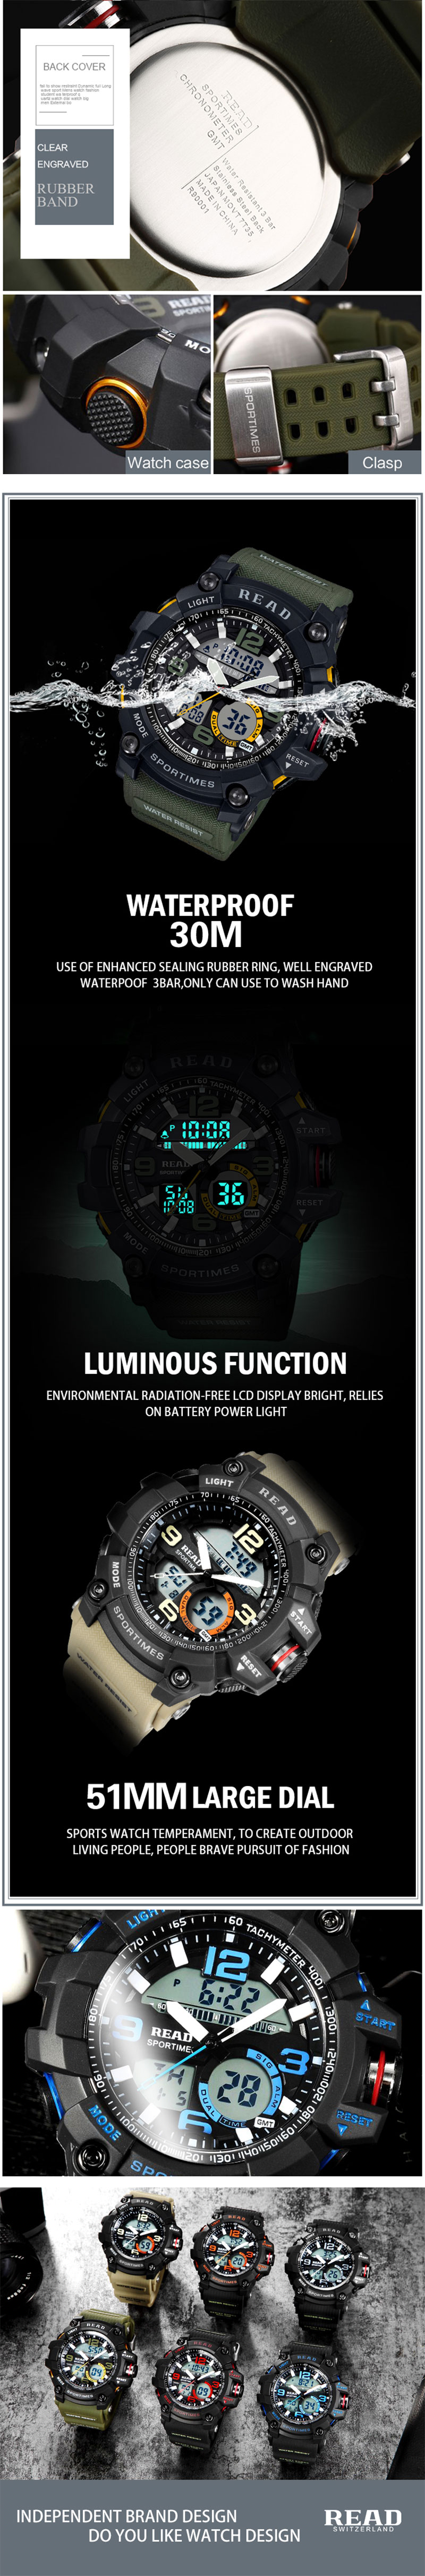 READ-R90001-Dual-Display-Digital-Watch-Chronograph-Waterproof-Alarm-Men-Quartz-Wrist-Watch-1284958